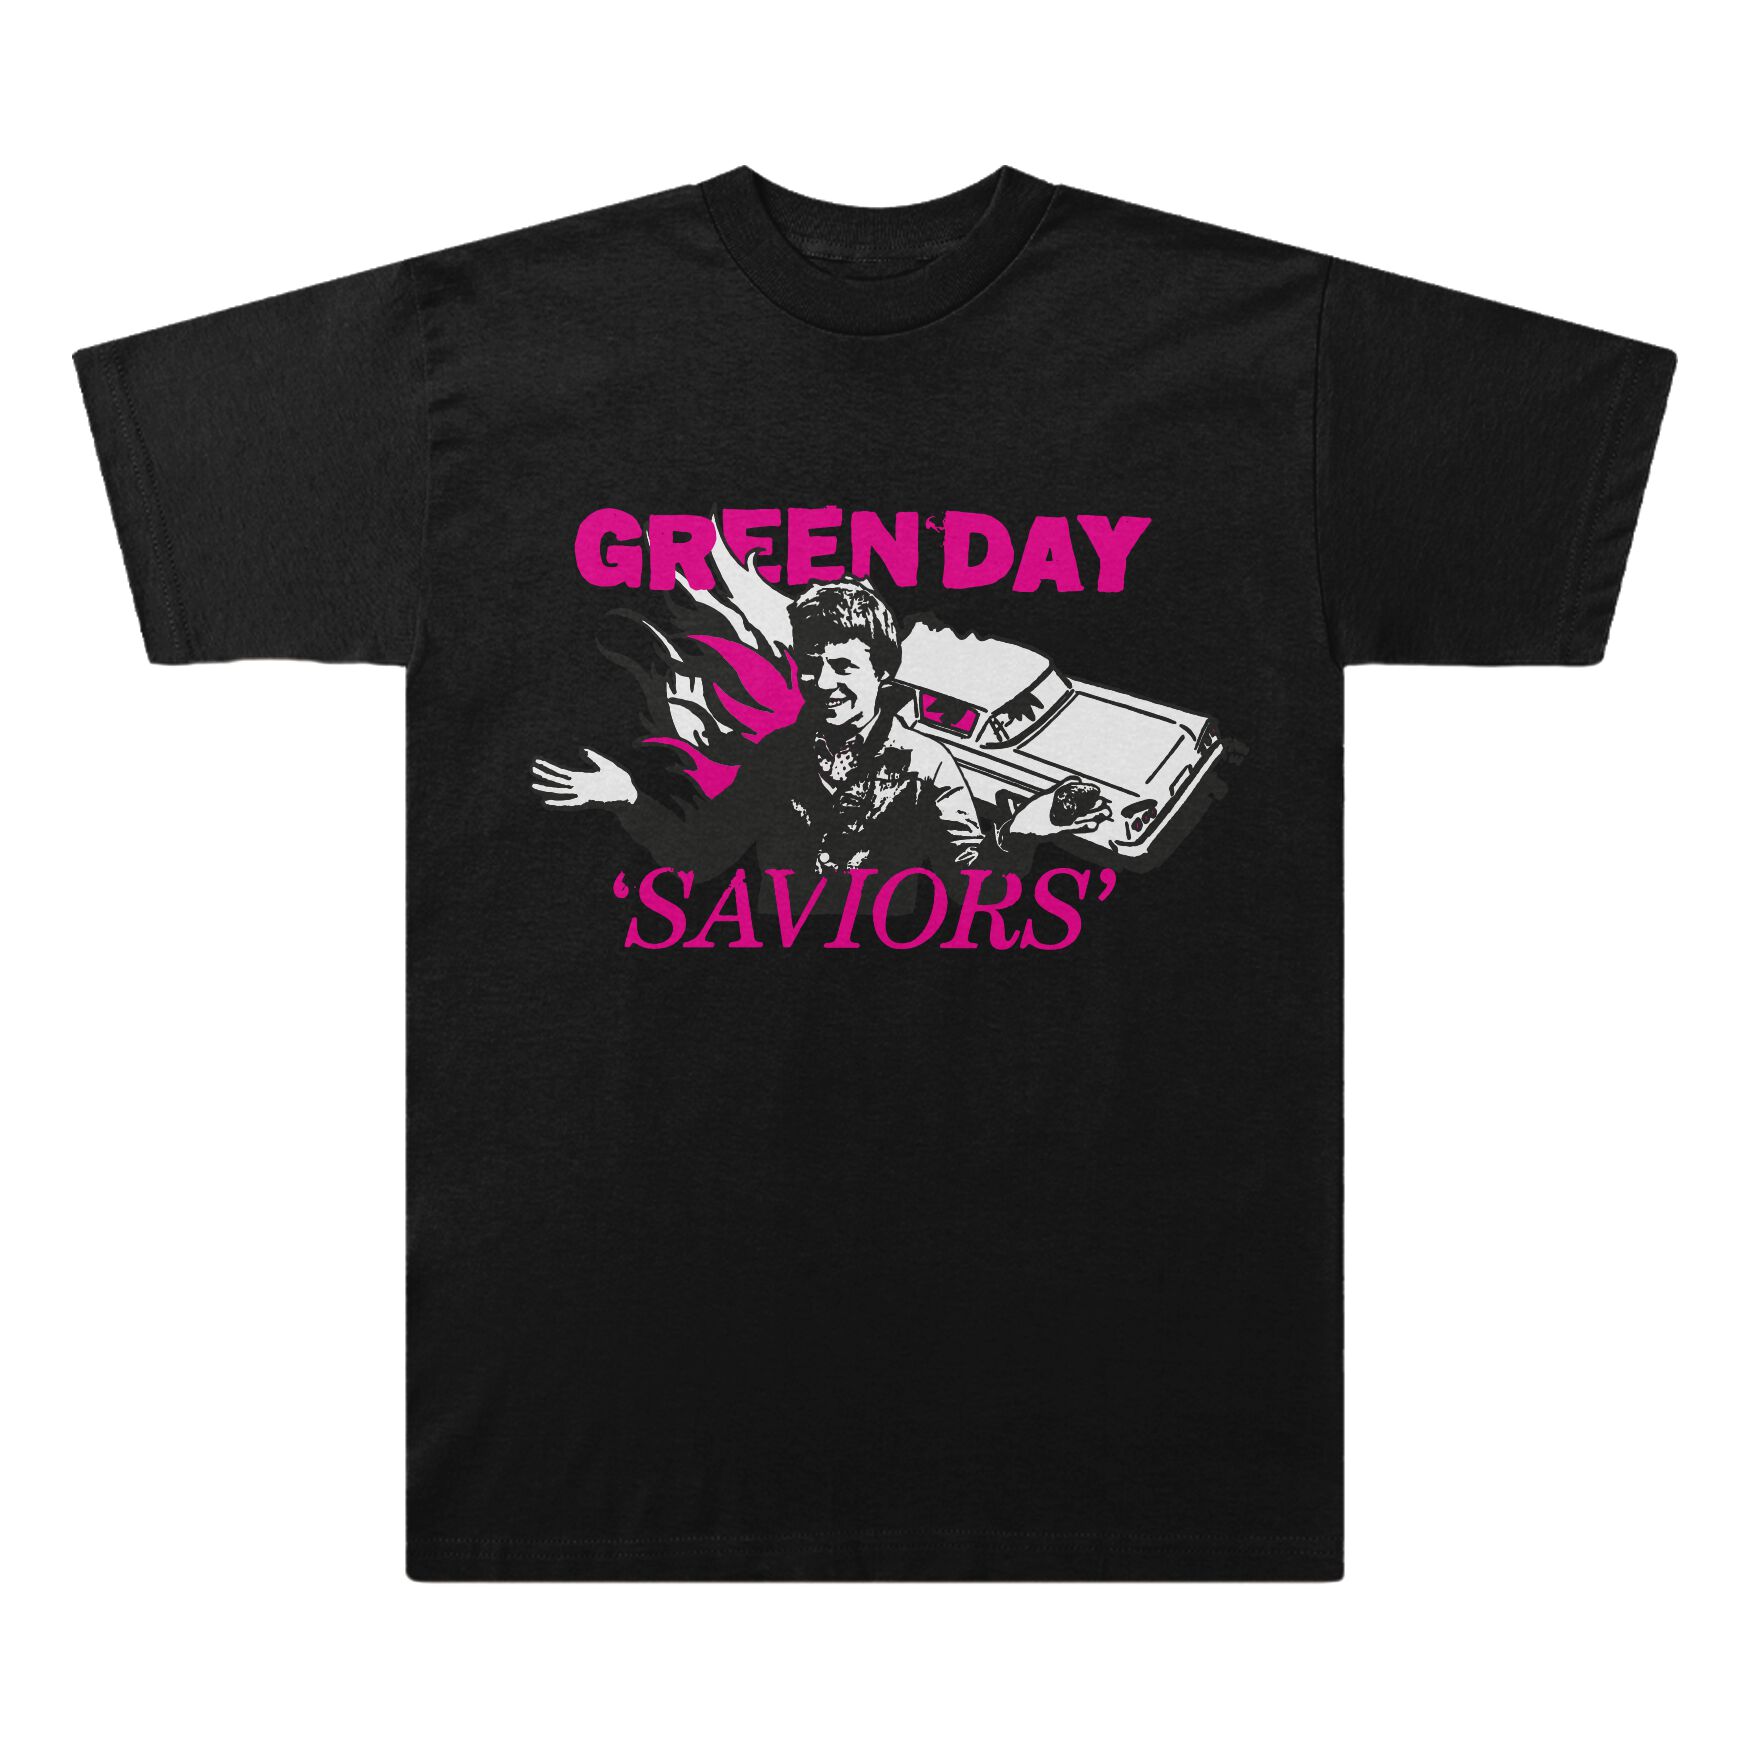 Green Day Saviors Illustration T-Shirt schwarz in L